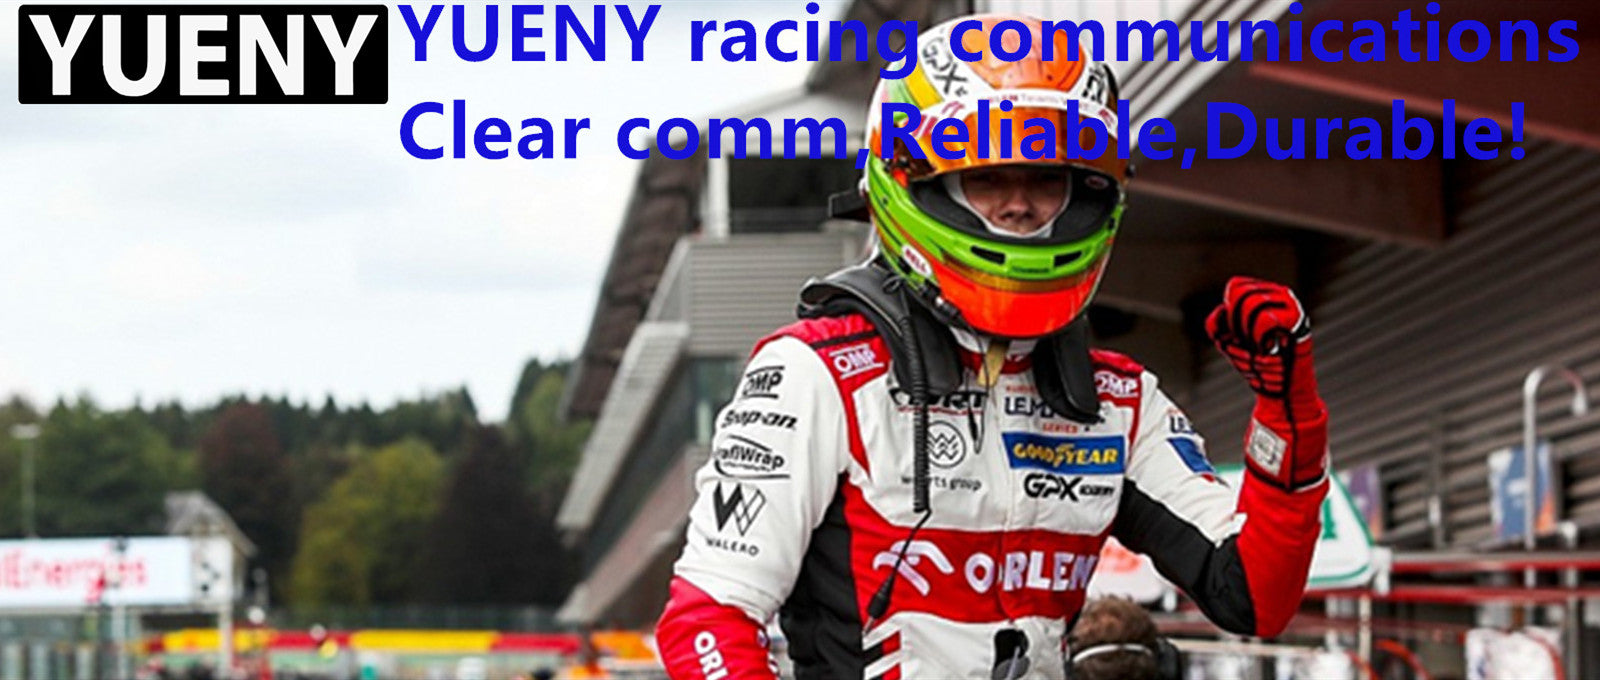 YUENY racing radio communications